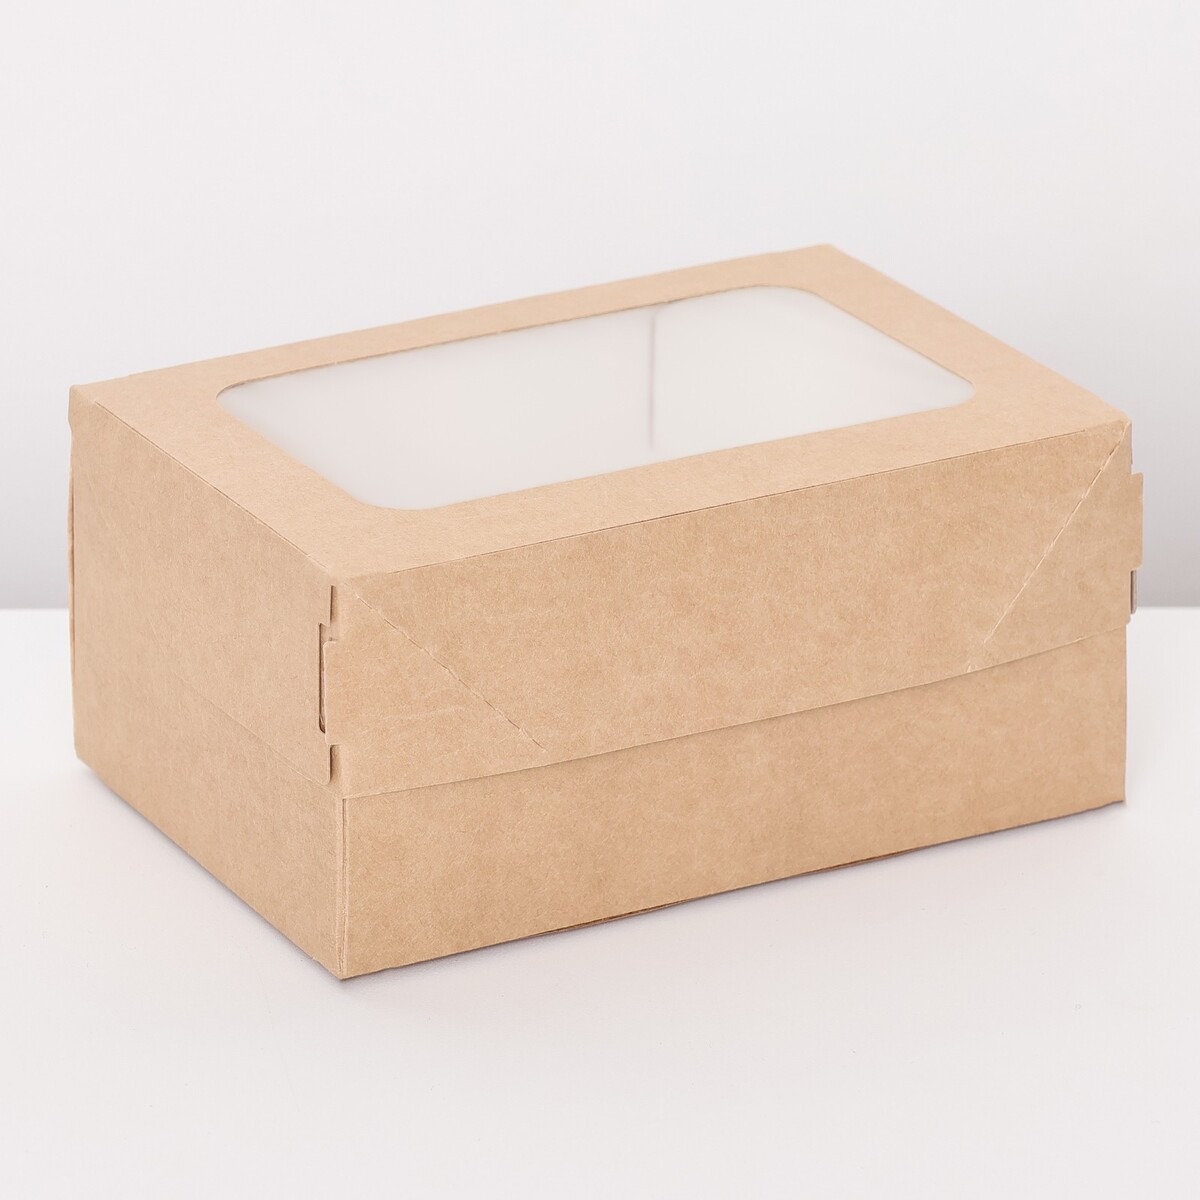 Коробка складная, с окном, крафт, 15 х 10 х 7 см набор 5 штук No brand